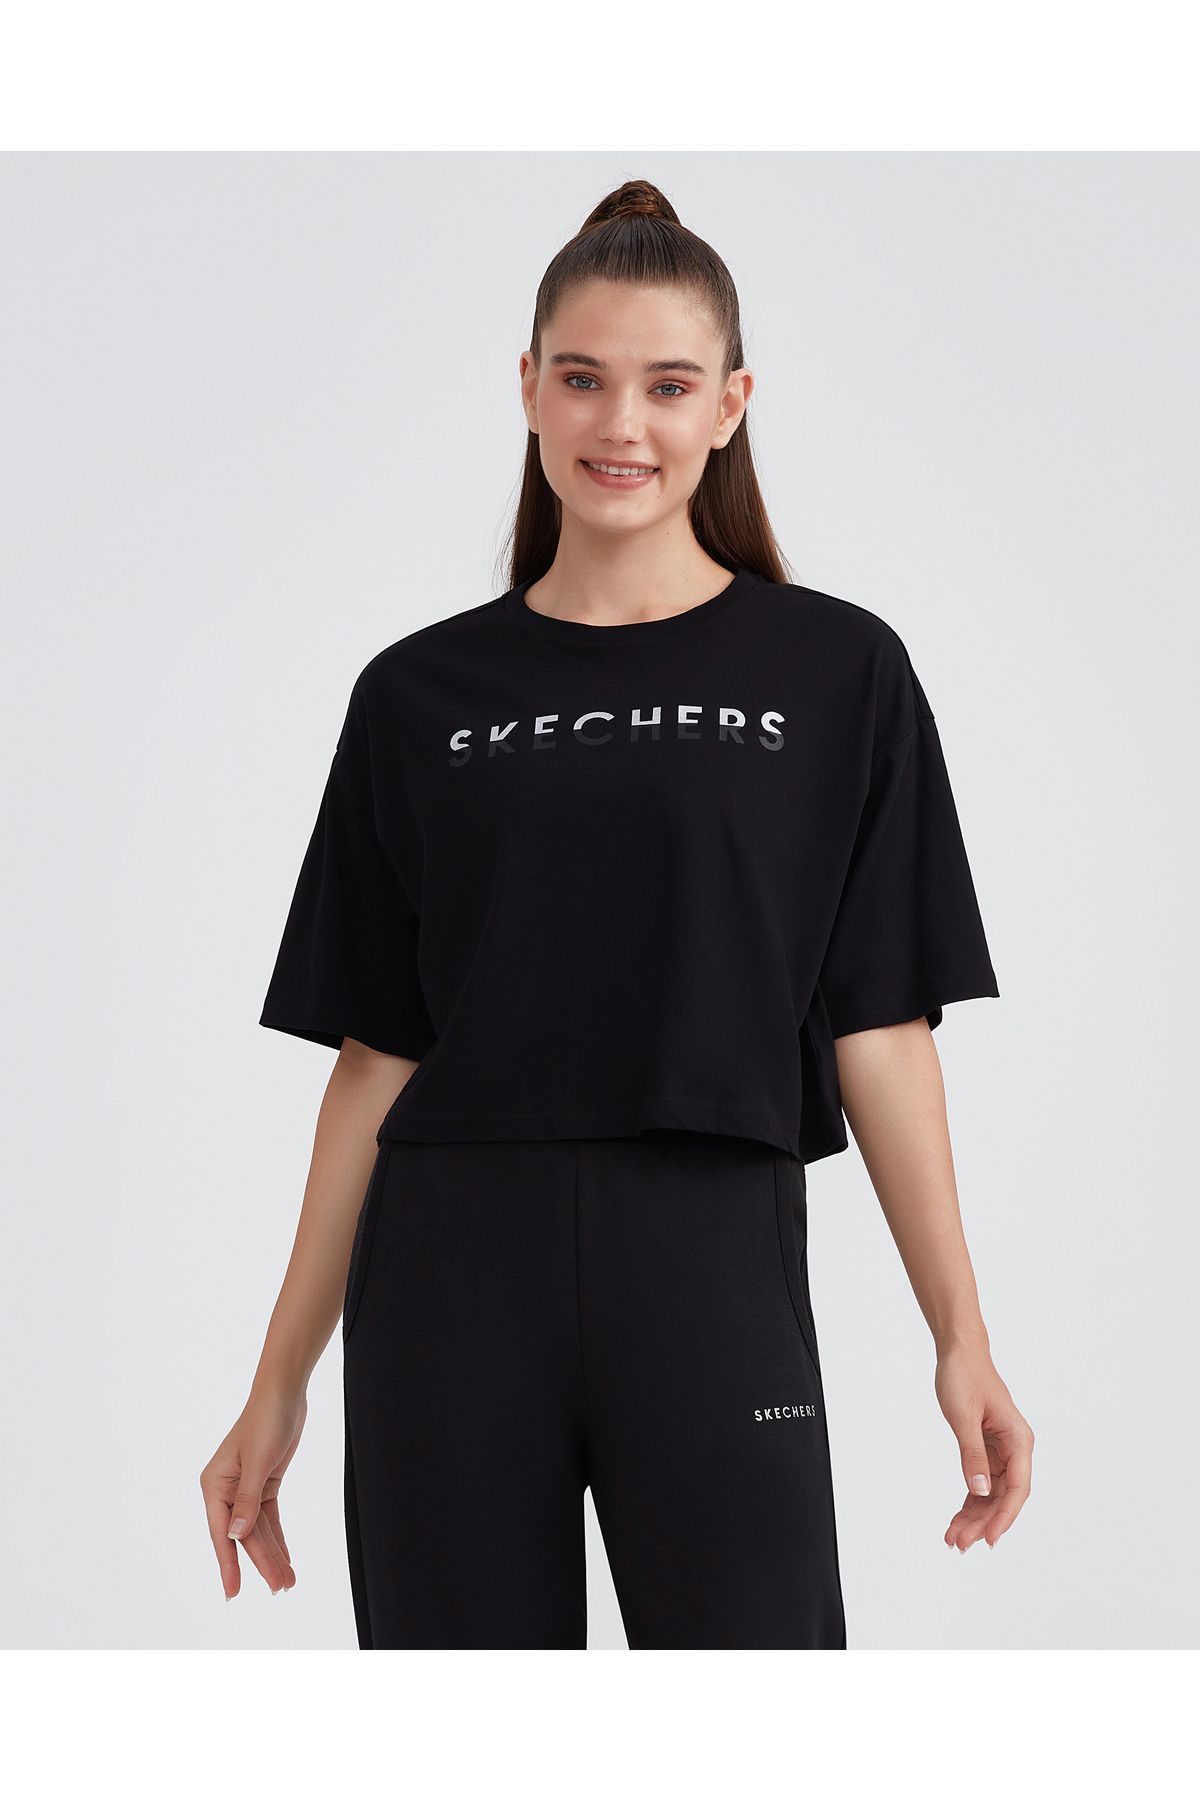 Skechers W Graphic Tee Crop T-shirt Kadın Siyah Tshirt S232163-001